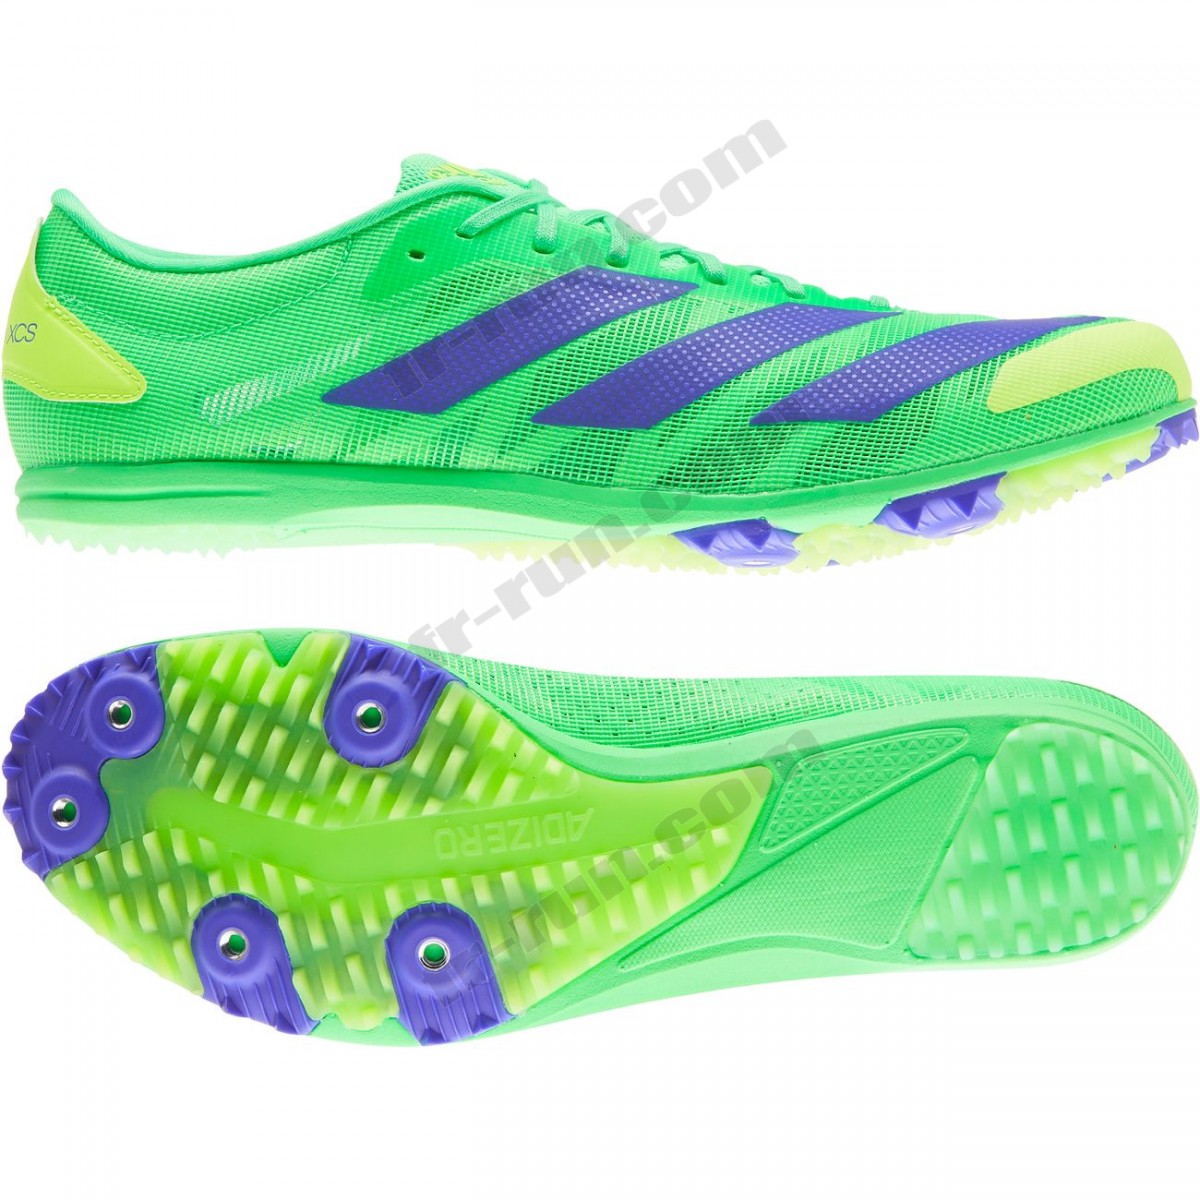 Adidas/Athlétisme adulte ADIDAS Chaussures adidas Adizero XCS √ Nouveau style √ Soldes - -5